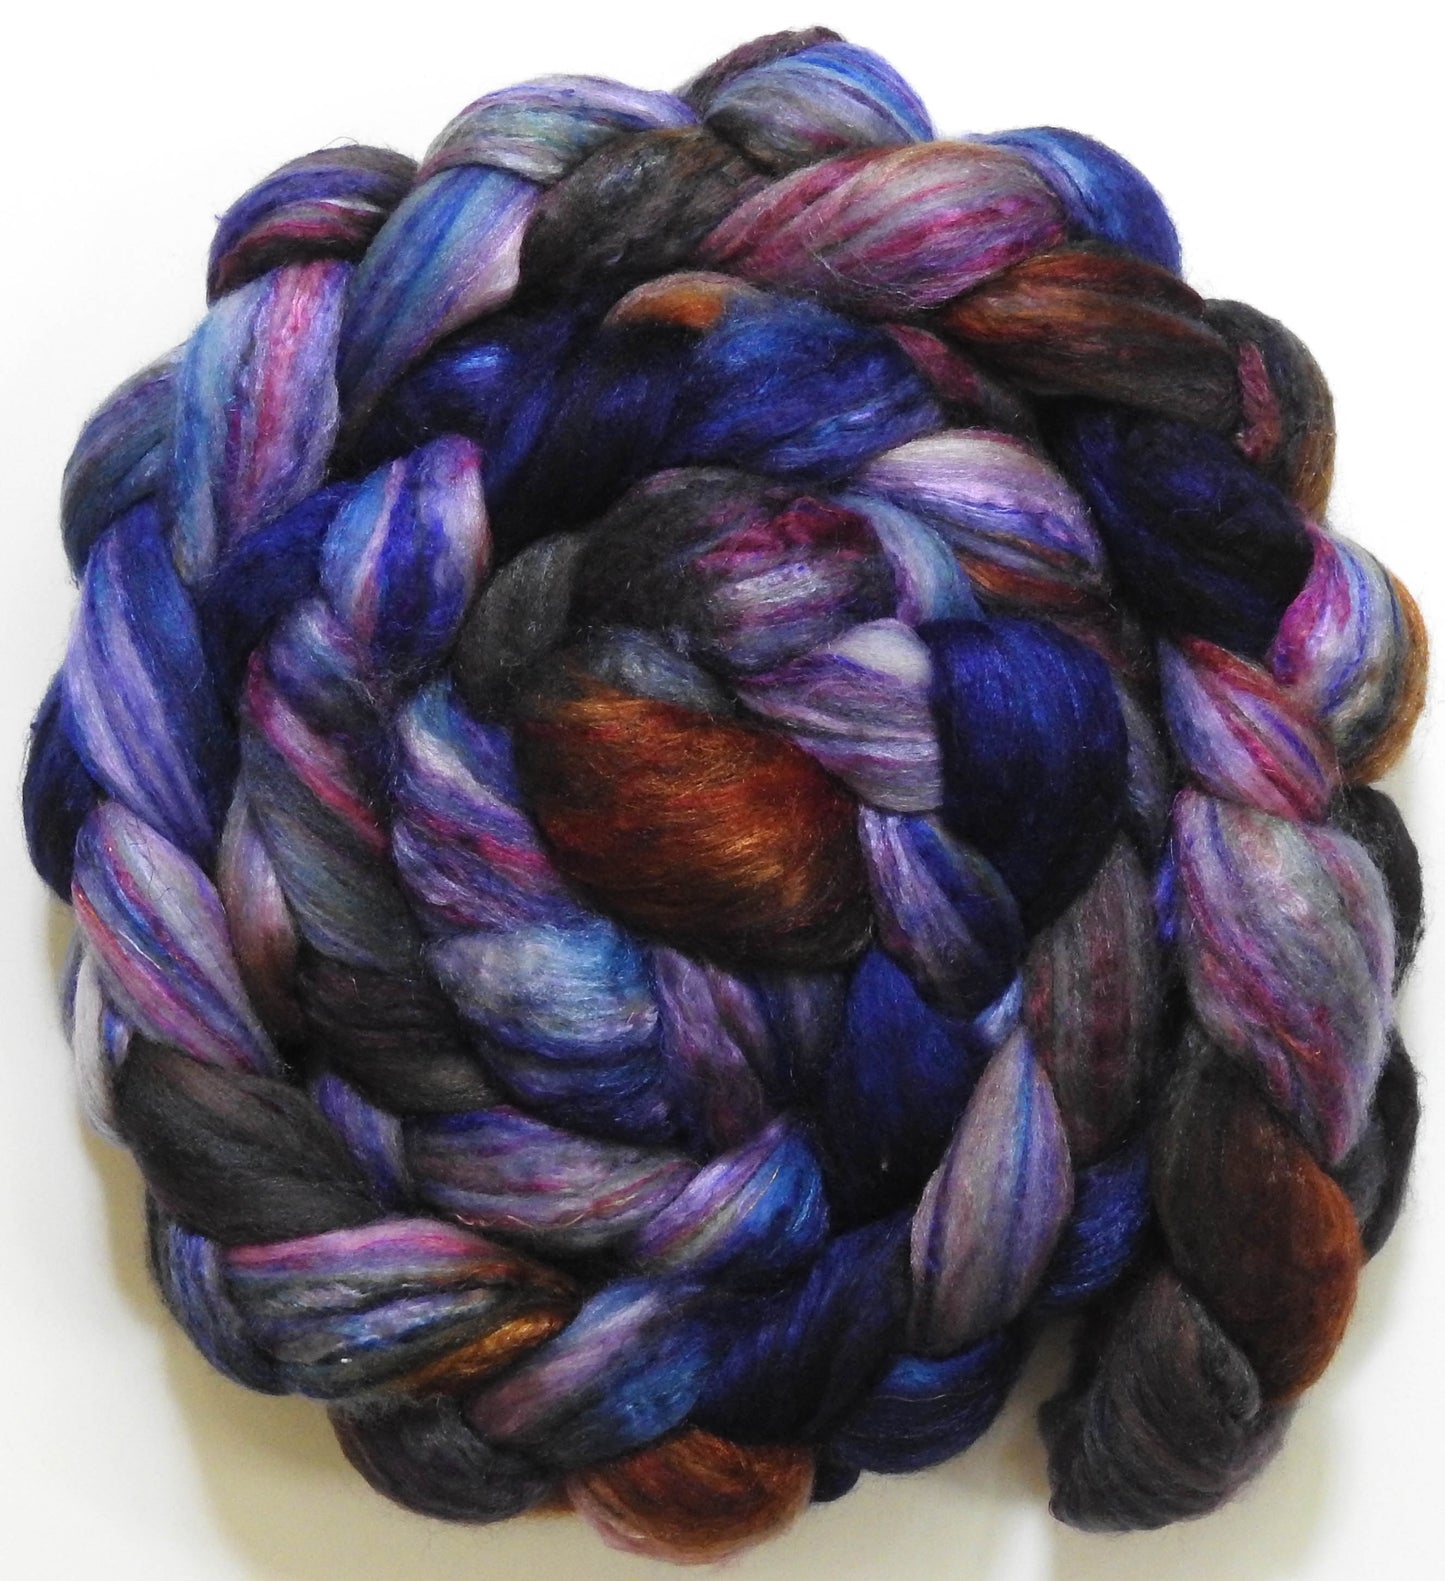 Singular - 42 (5.7 oz)-Batt in a Braid #39 - Merino/ Mulberry Silk / Sari Silk (50/25/25)